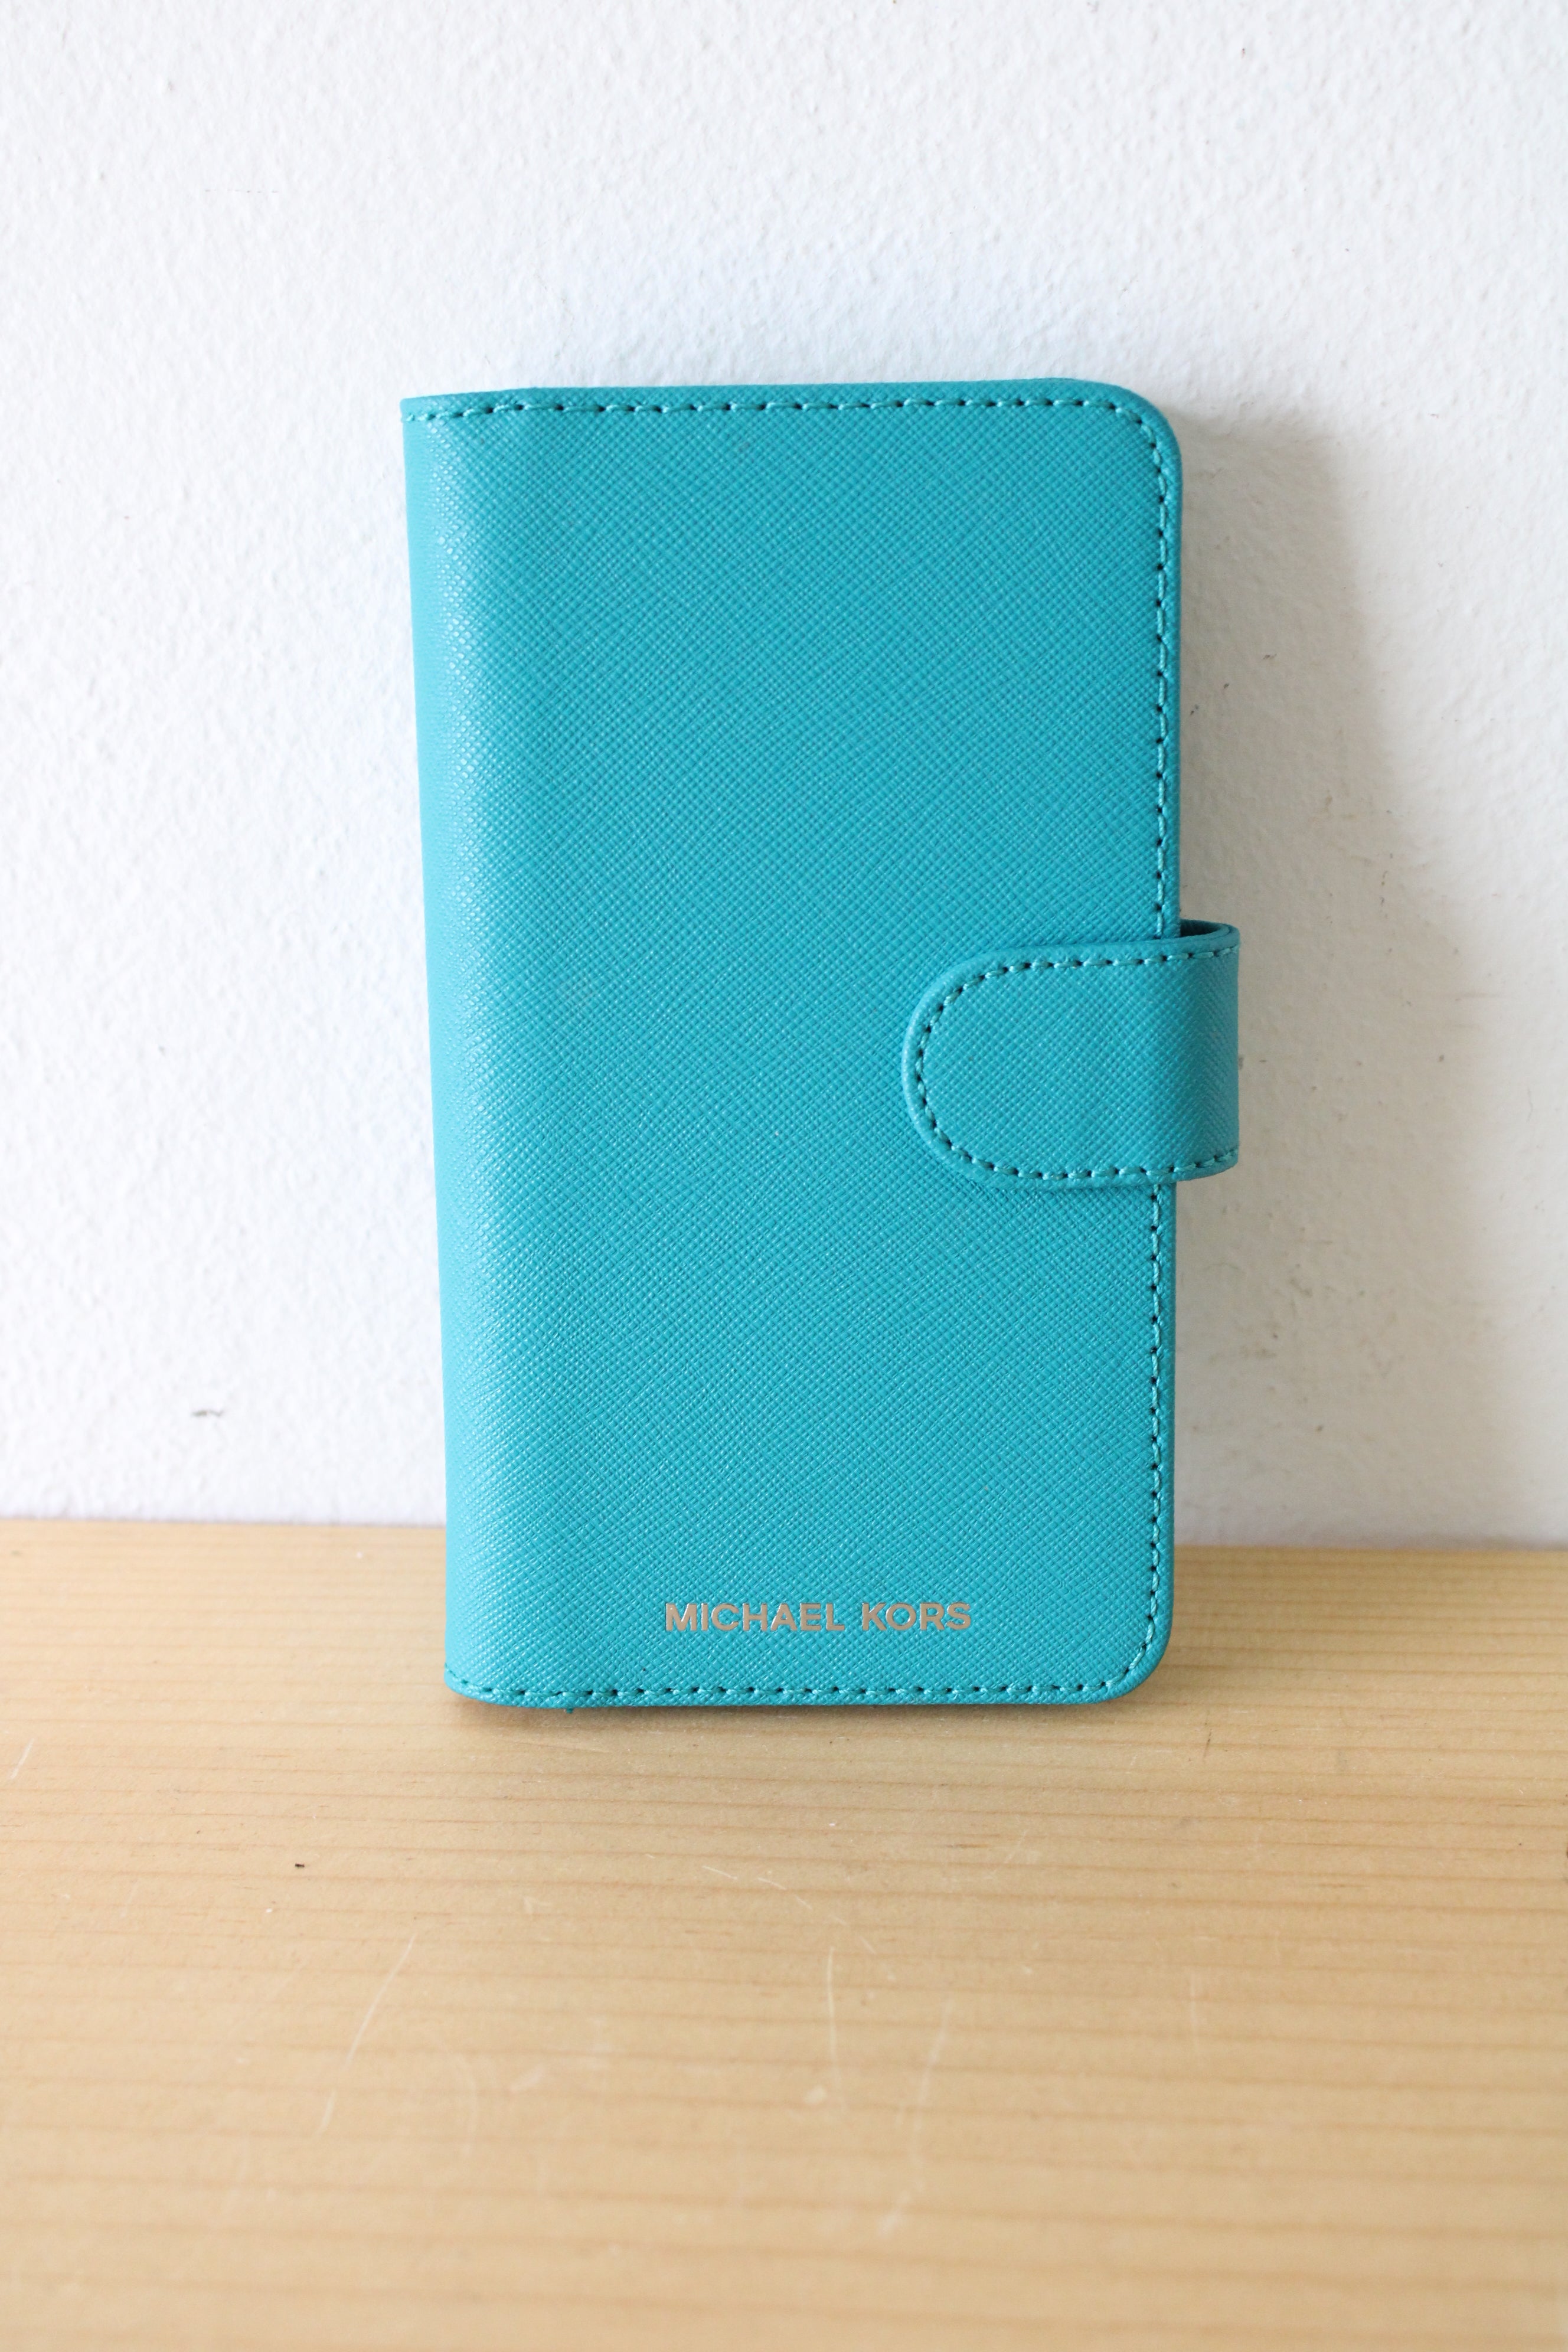 Michael Kors Saffiano Leather Blue Folio Case For iPhone X